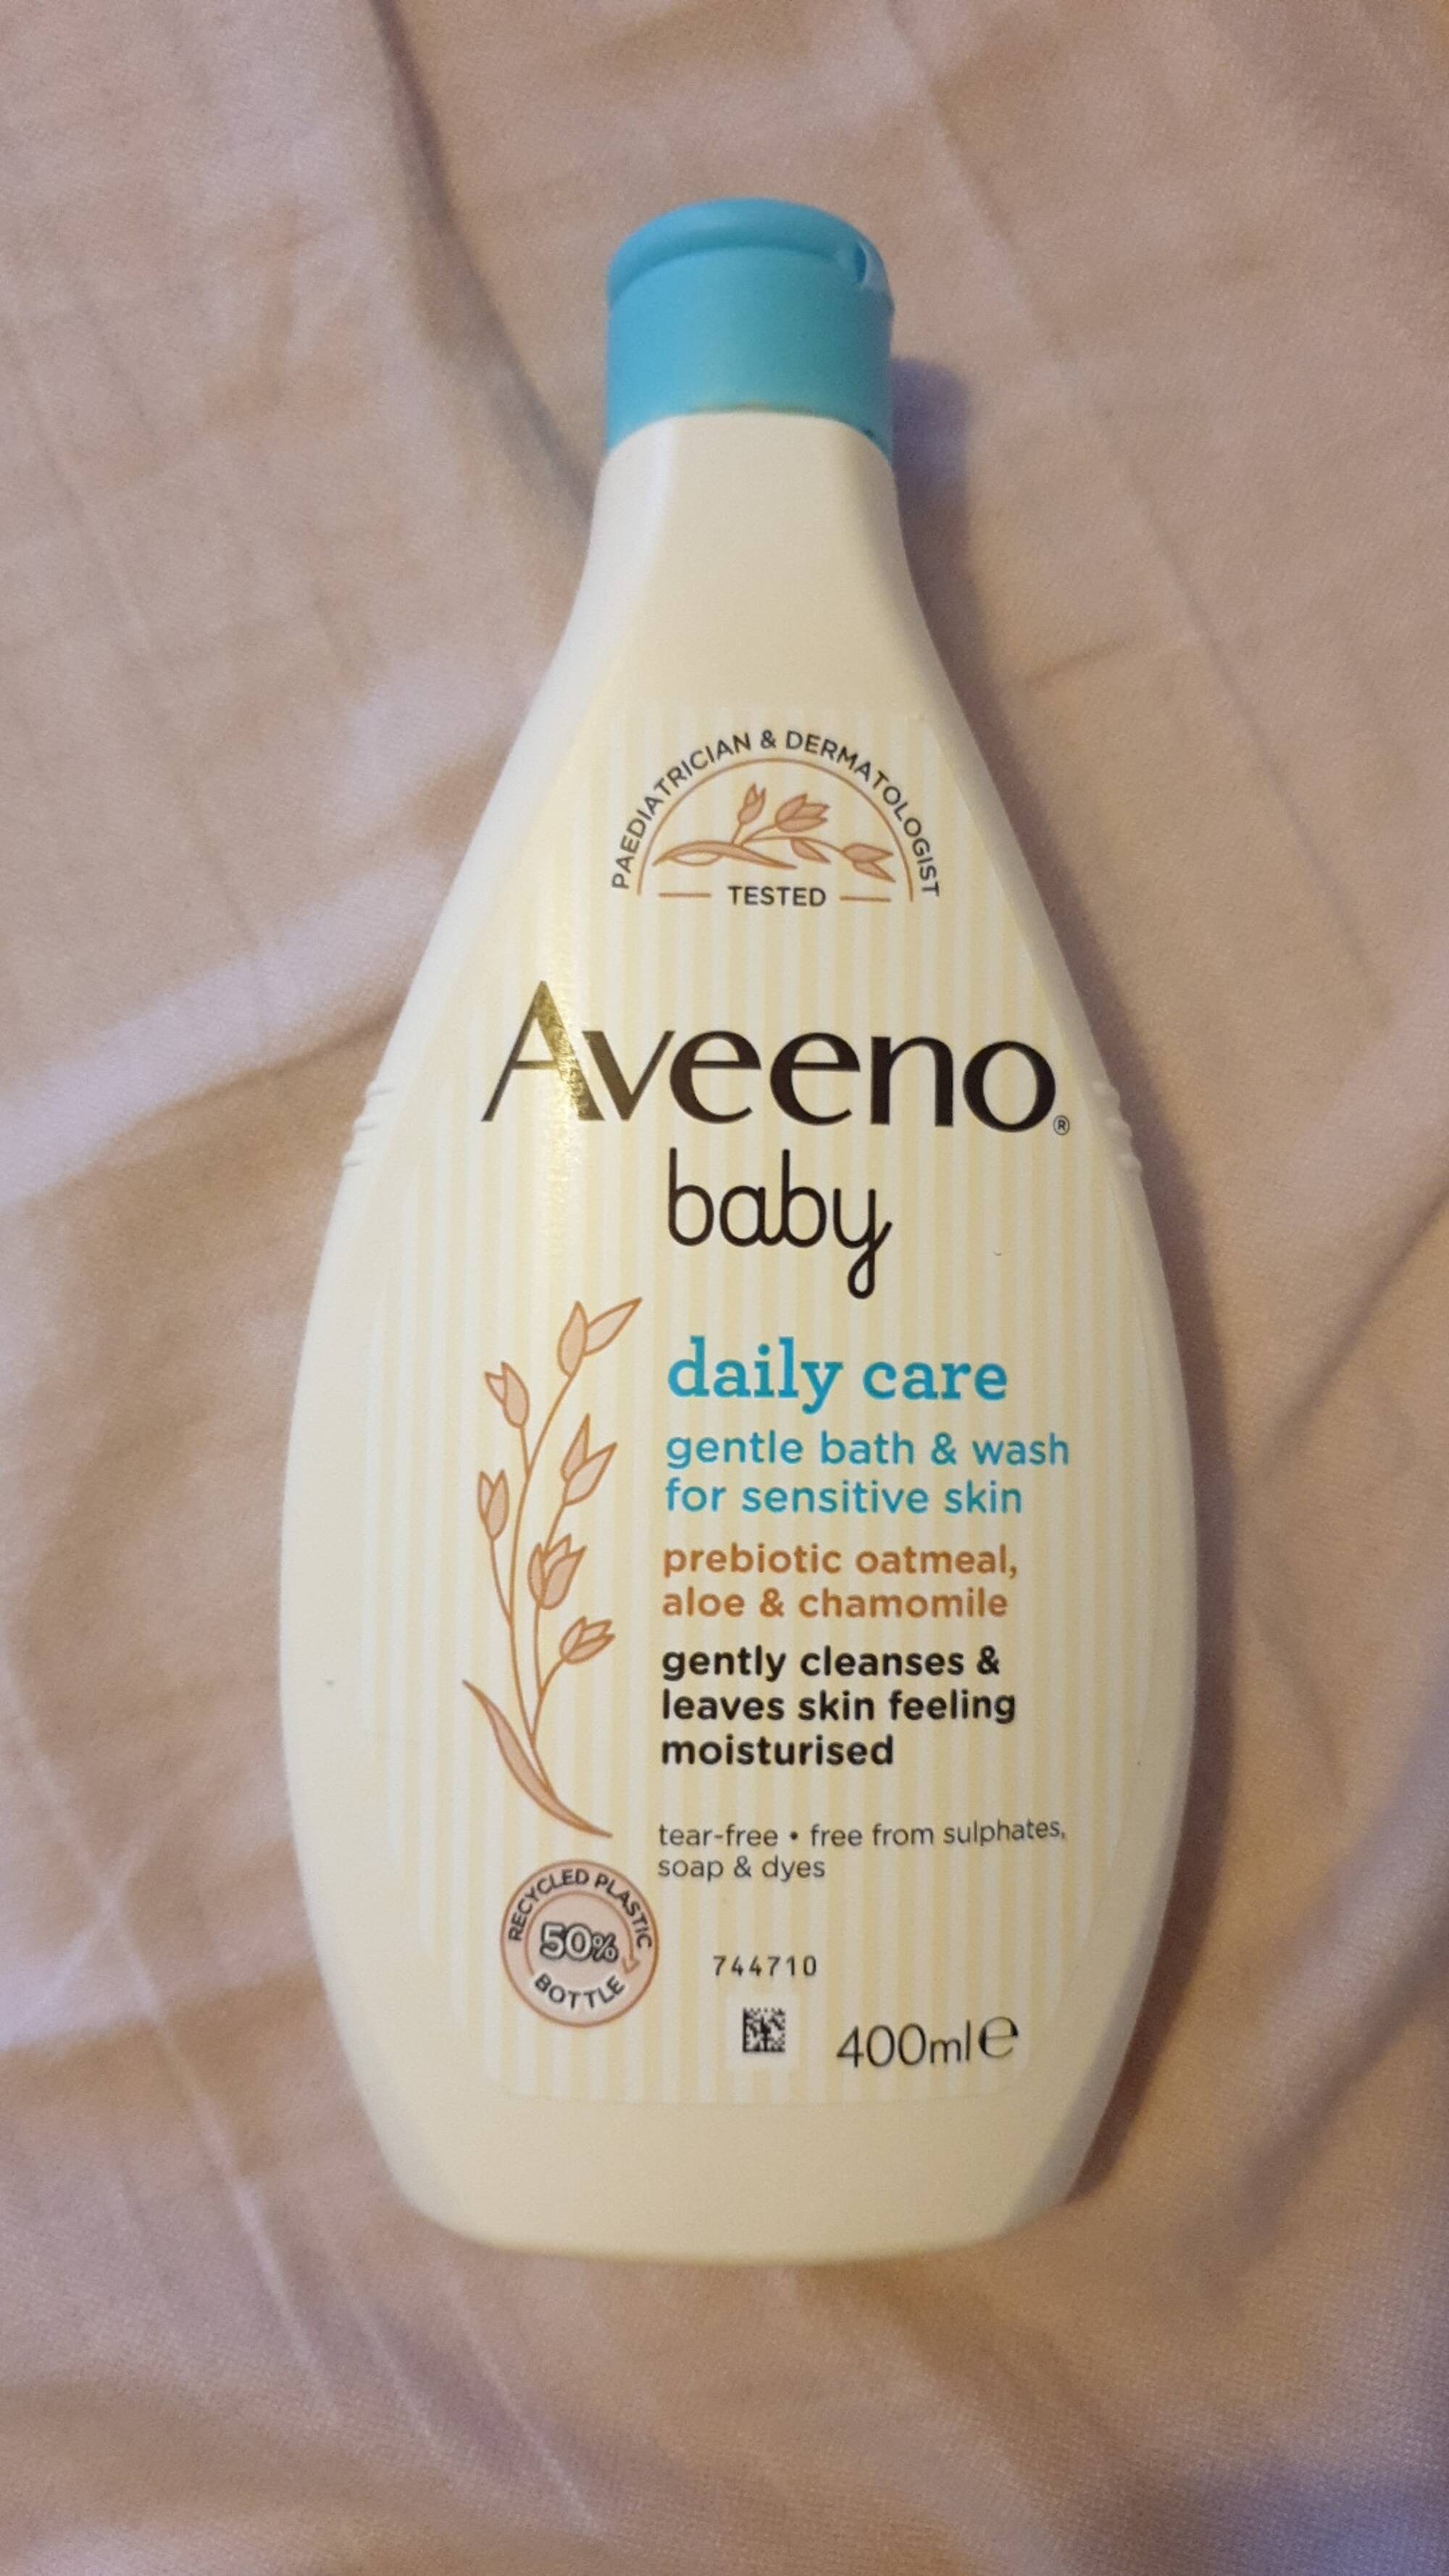 AVEENO - Daily care baby - Gentle bath & wash for sensitve skin